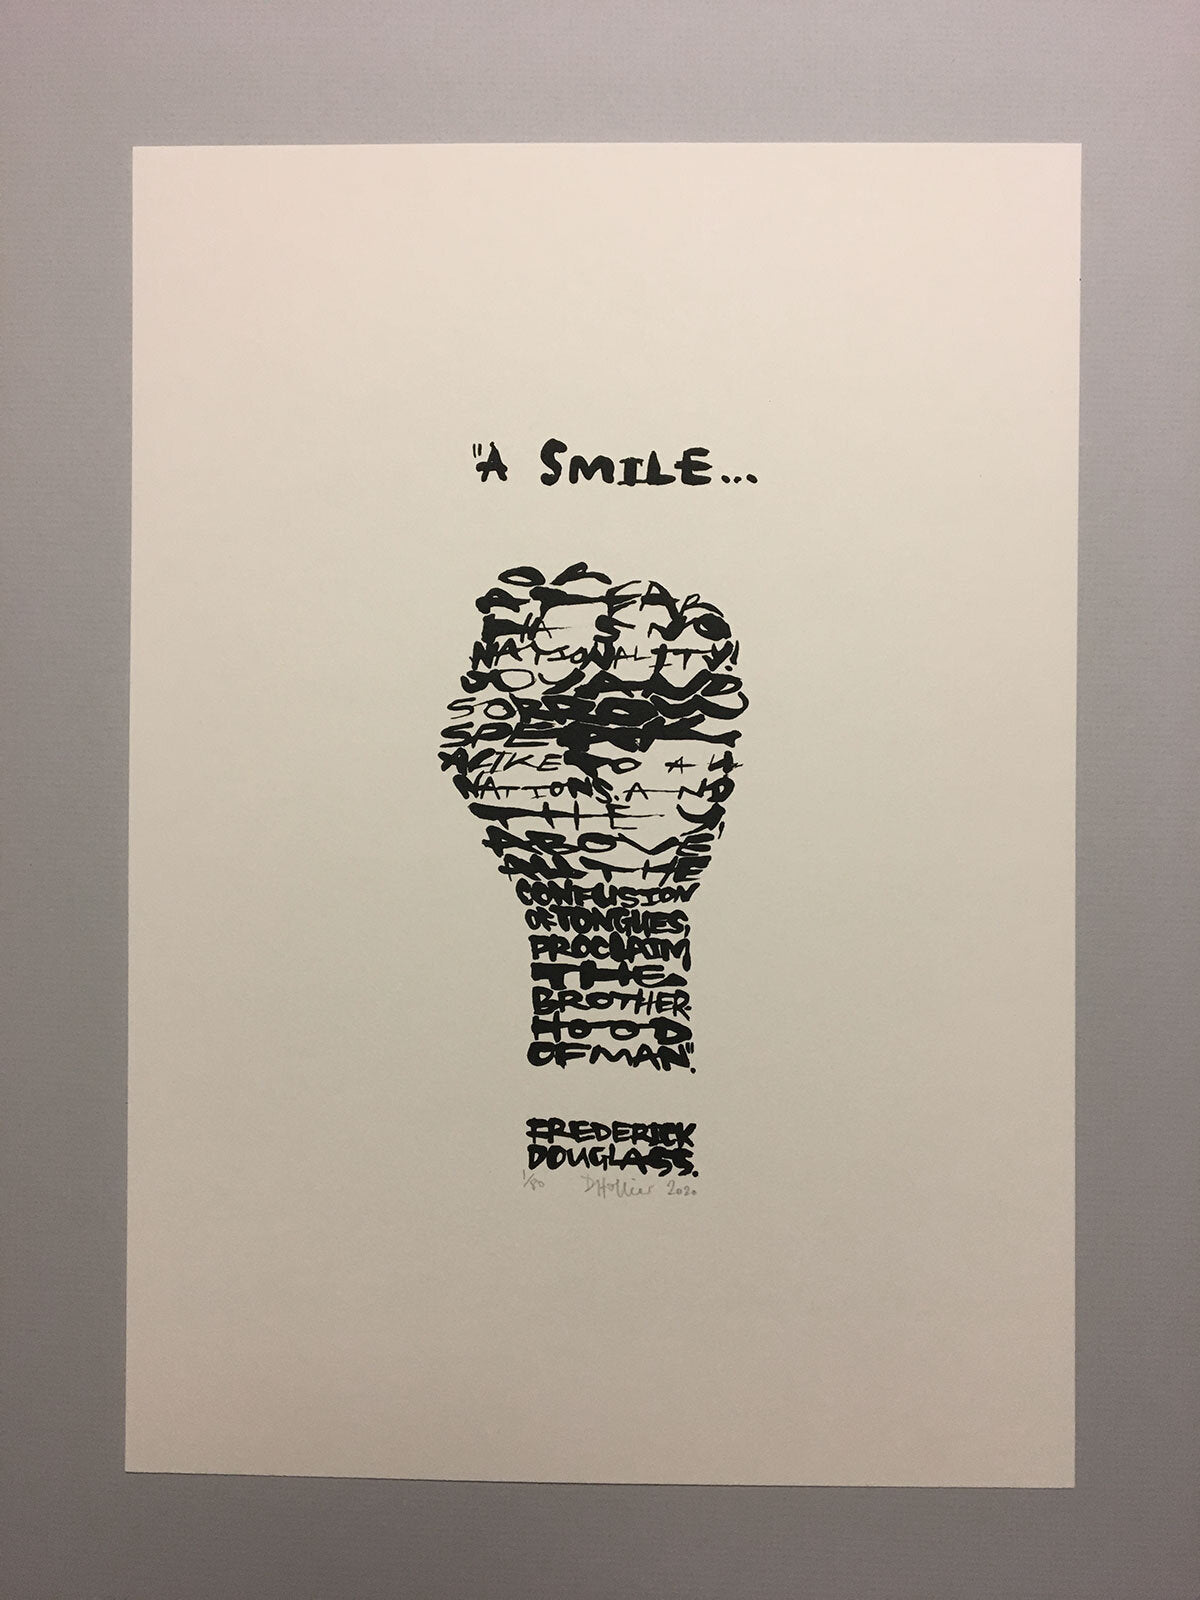 "A Smile..." - Frederick Douglass